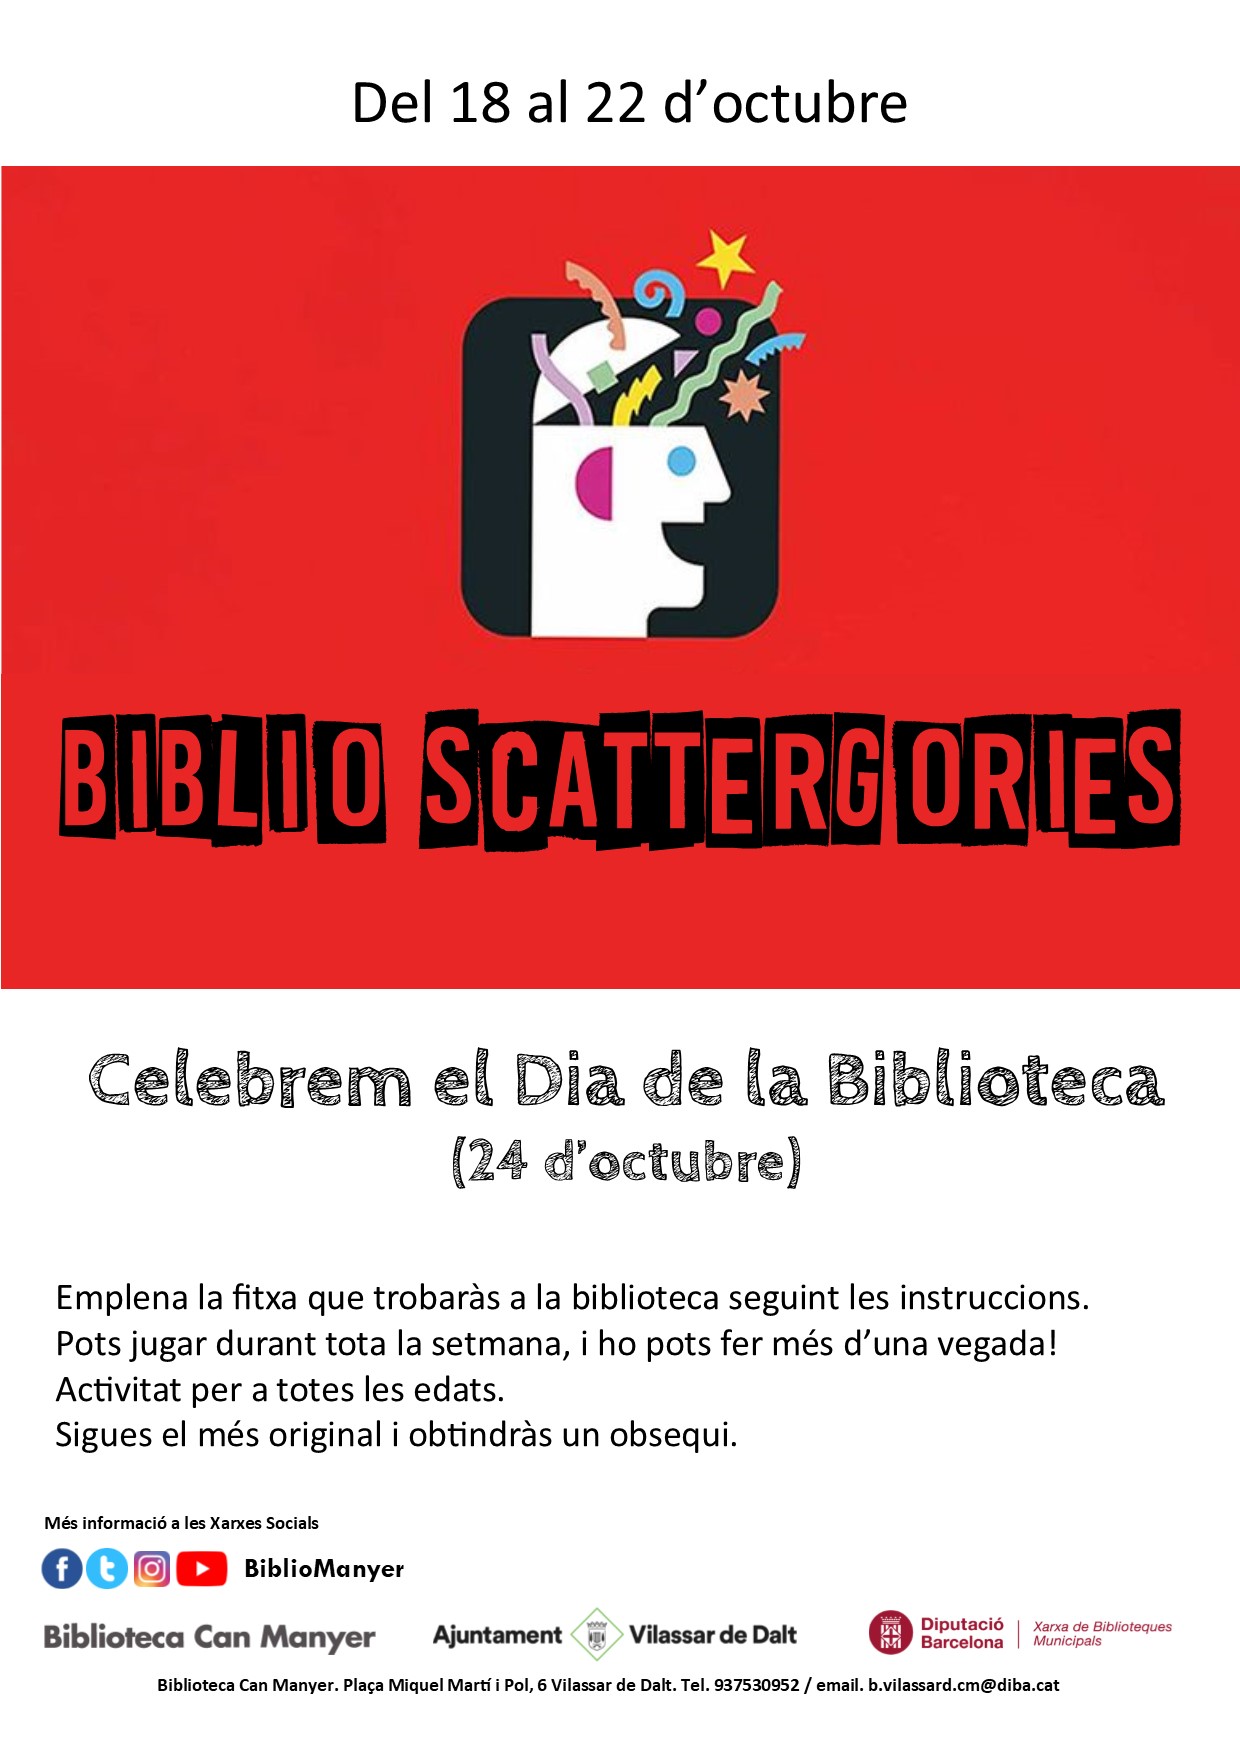 Biblio Scattergories